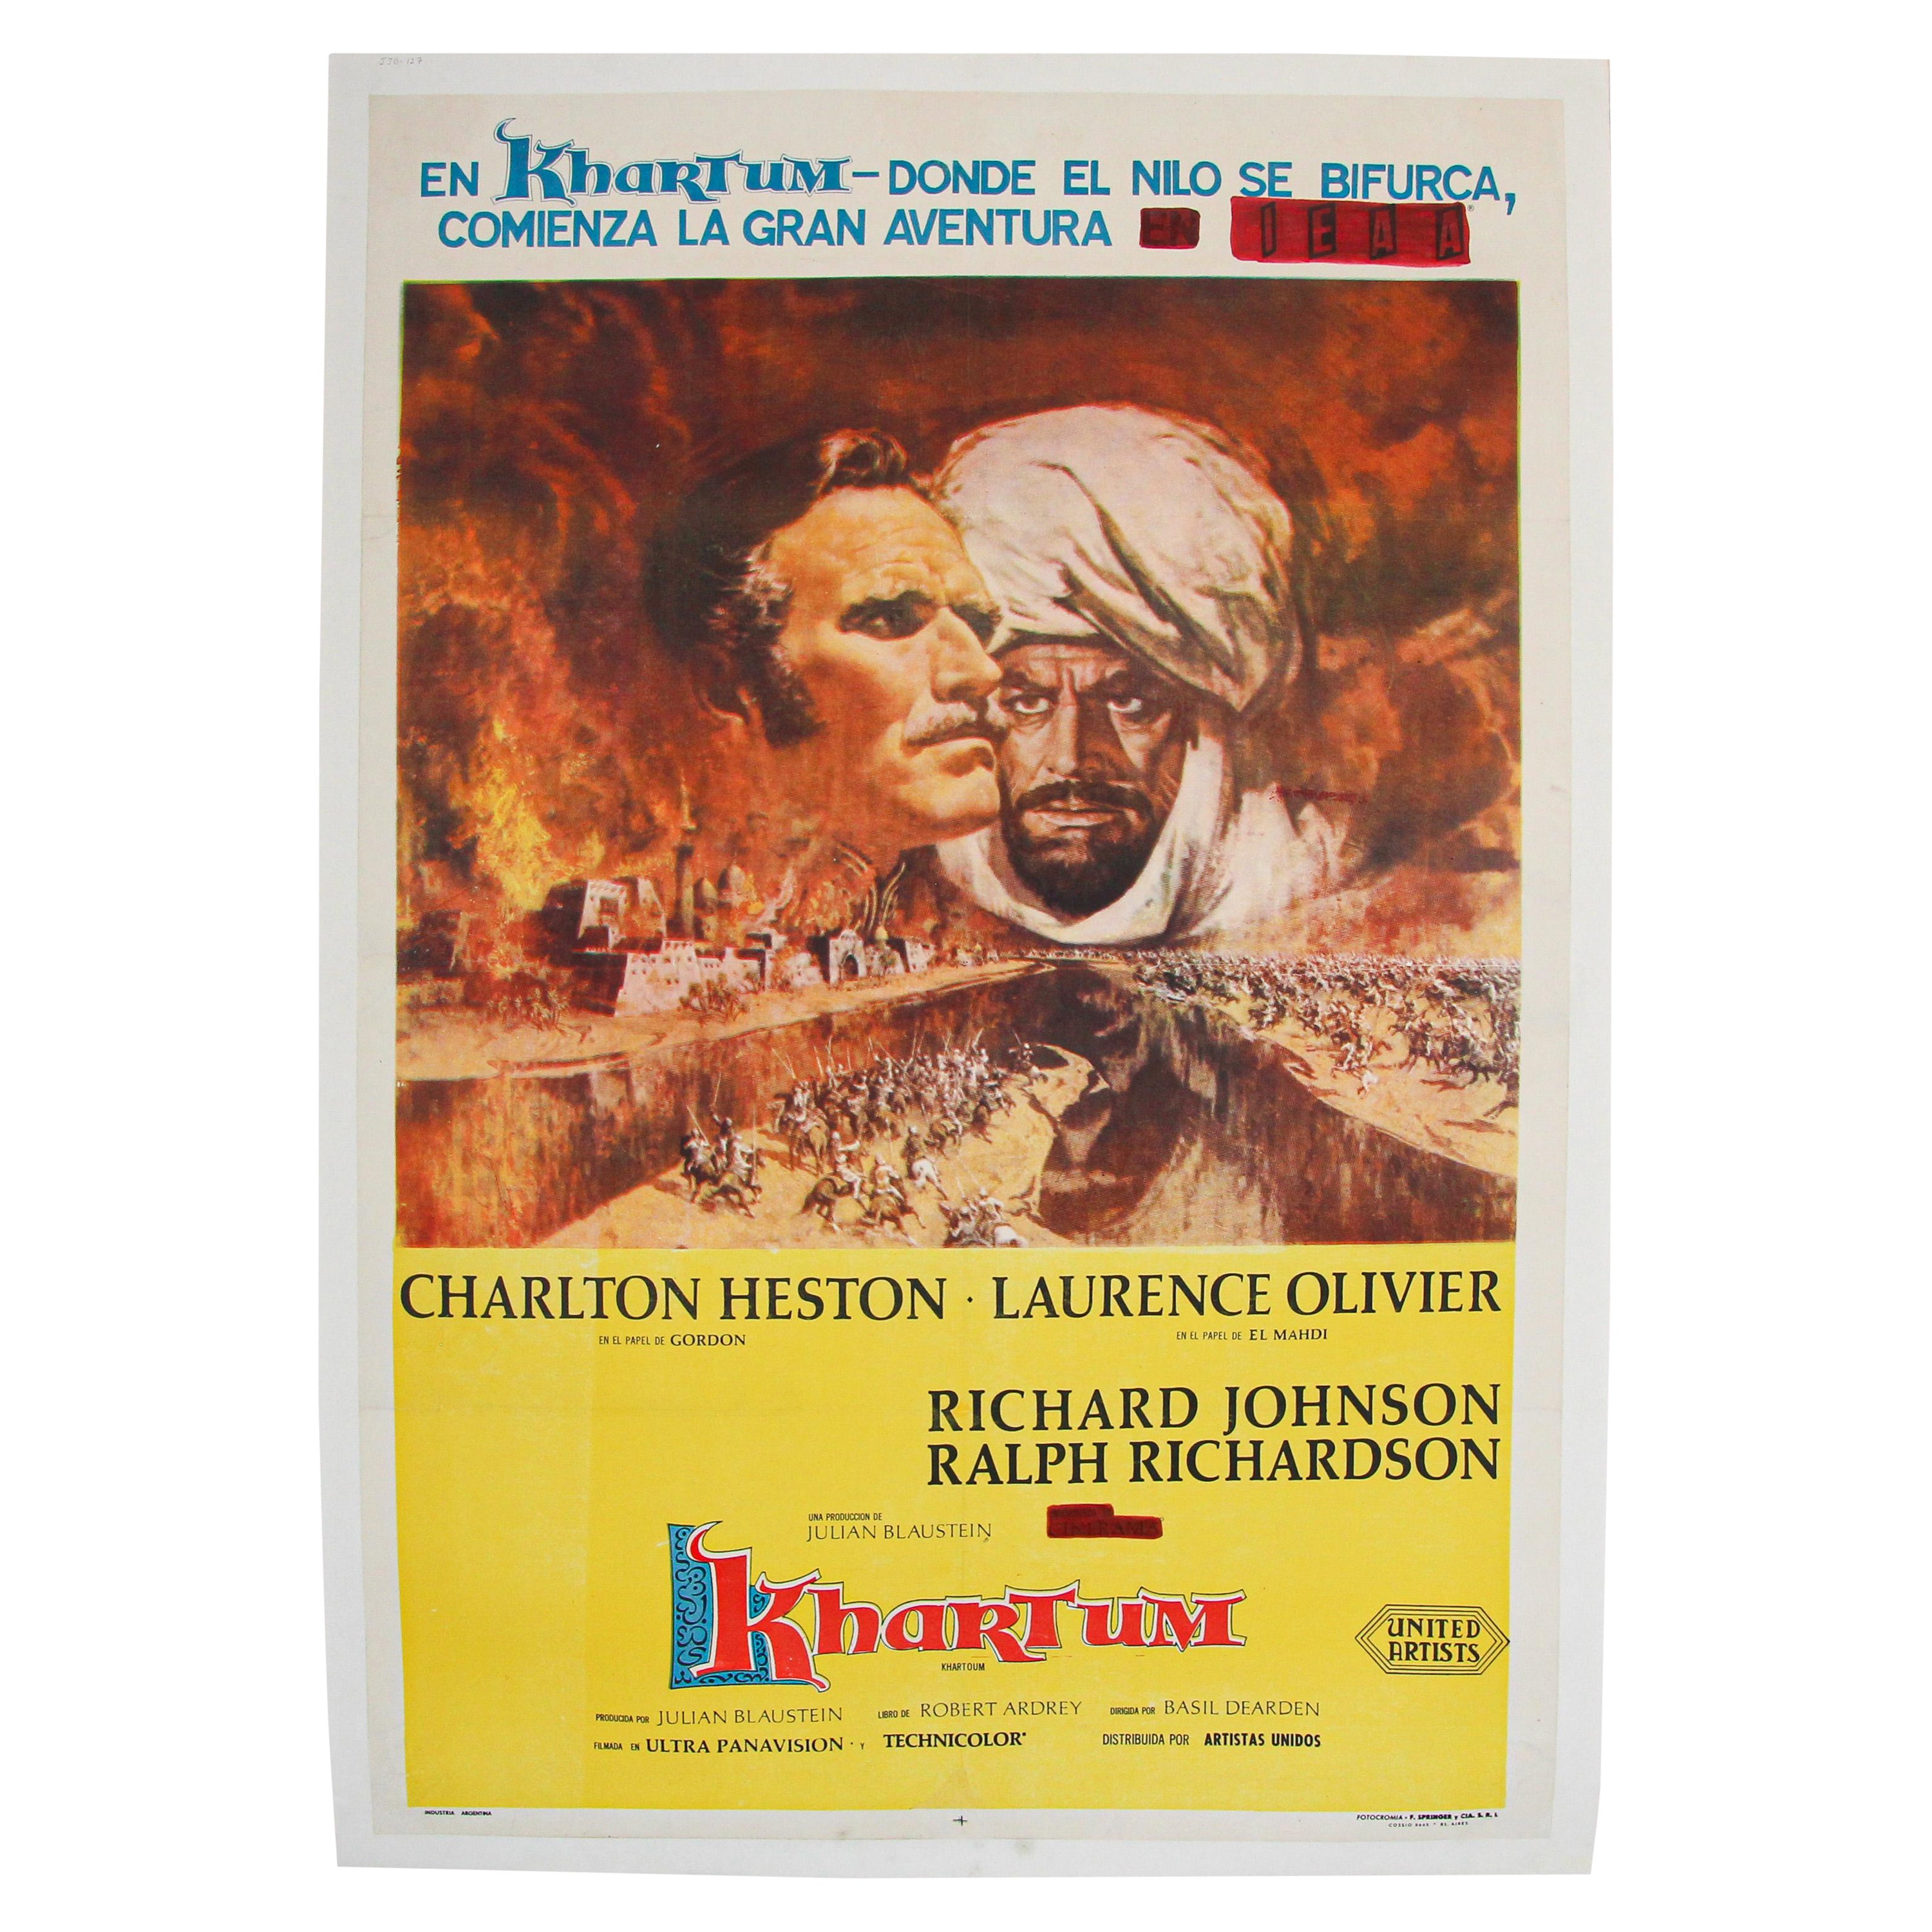 Khartoum, 1966 British Epic War Movie Poster in Spanish For Sale